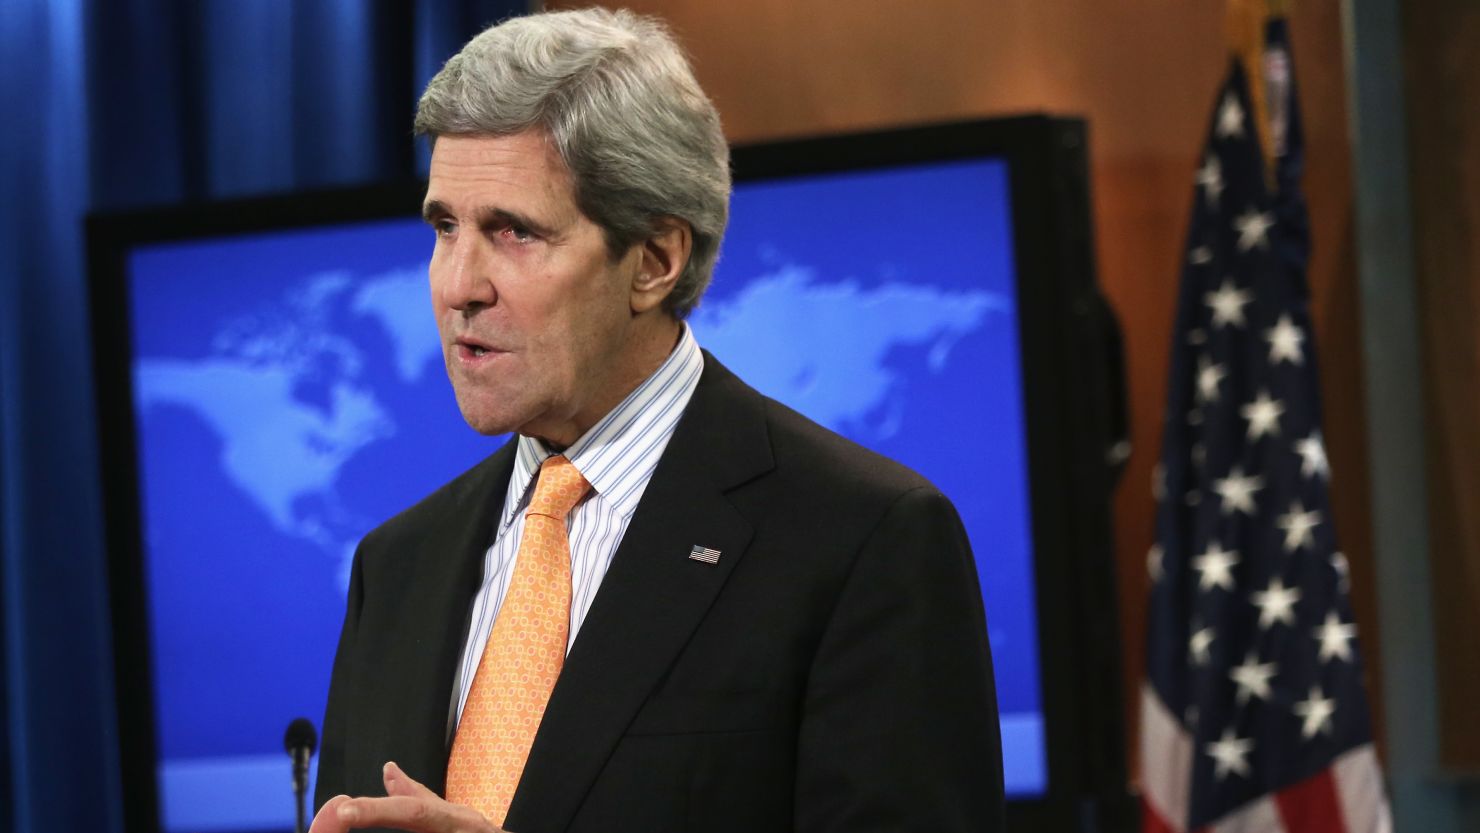 U.S. Secretary of State John Kerry makes a statement on Syria on January 16 in Washington, DC.